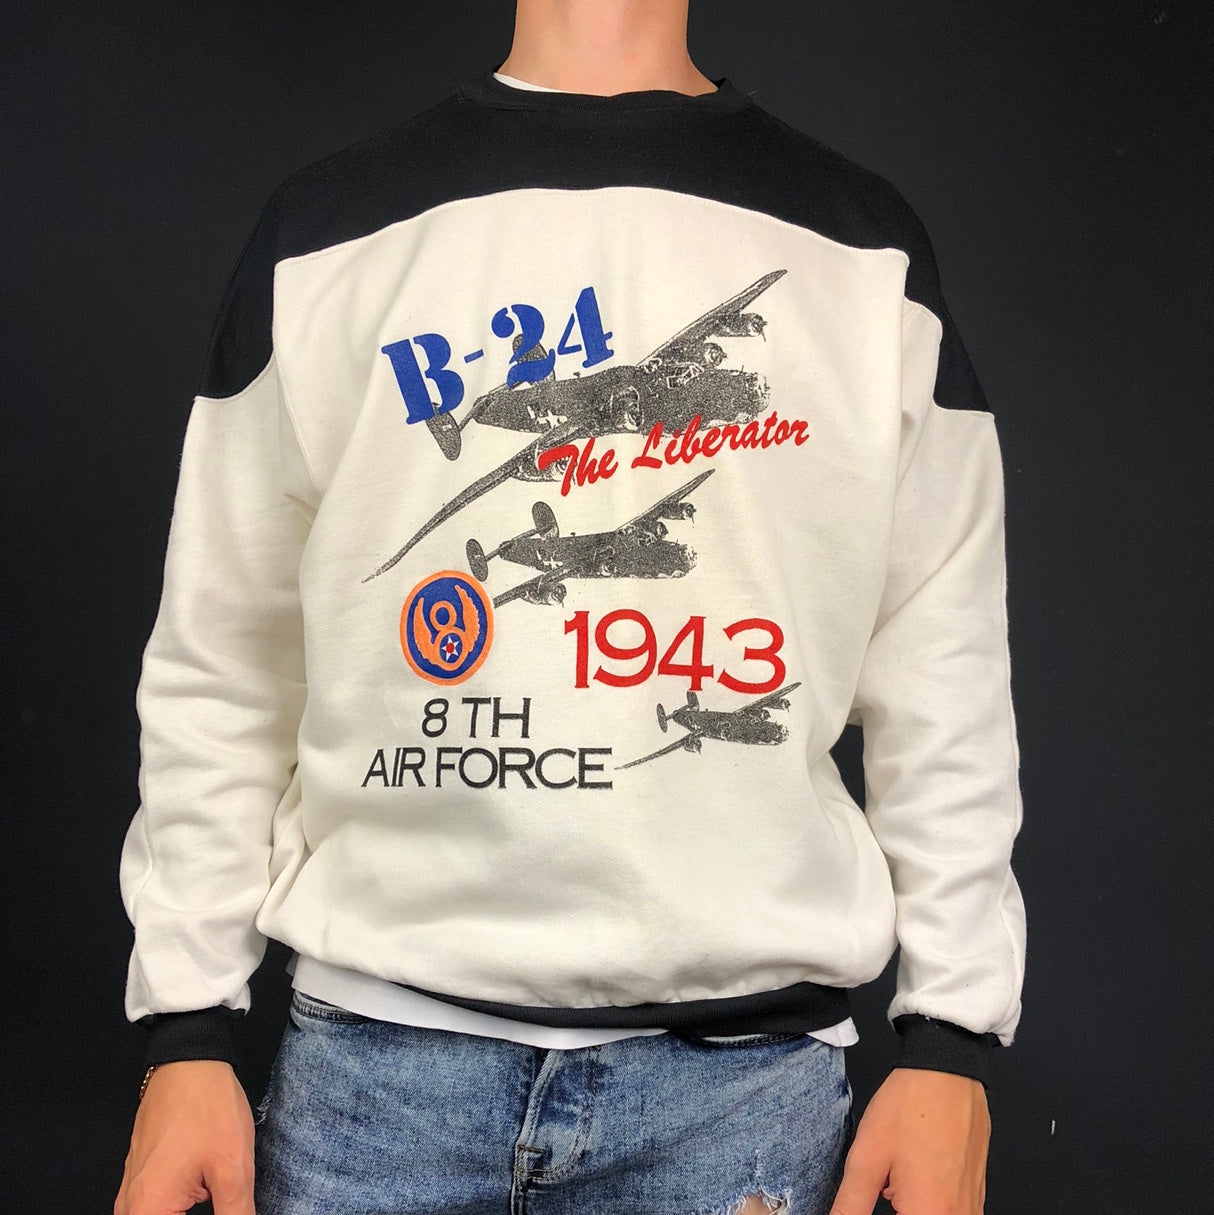 Unbranded WWII Army Print Sweatshirt - Women's Large/Men's Medium